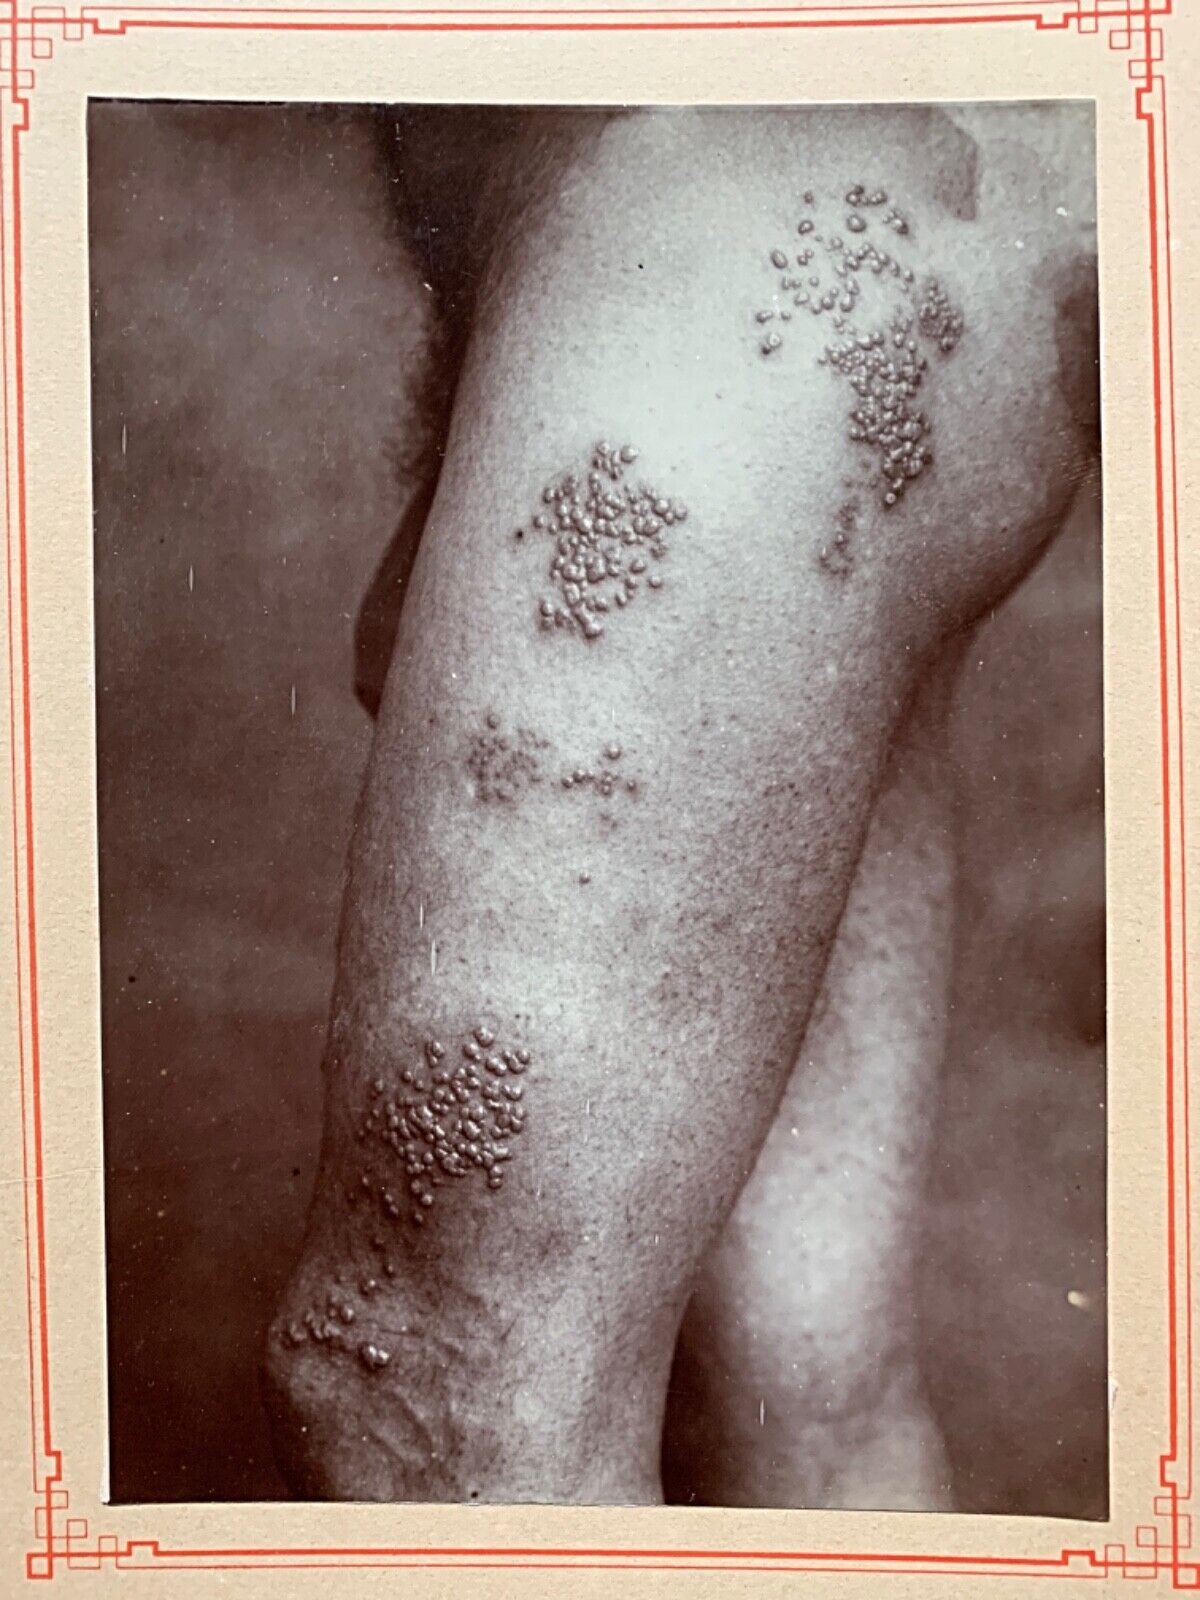 1908 Mounted Photo Skin Disease On Man’s Thigh Syphilis?